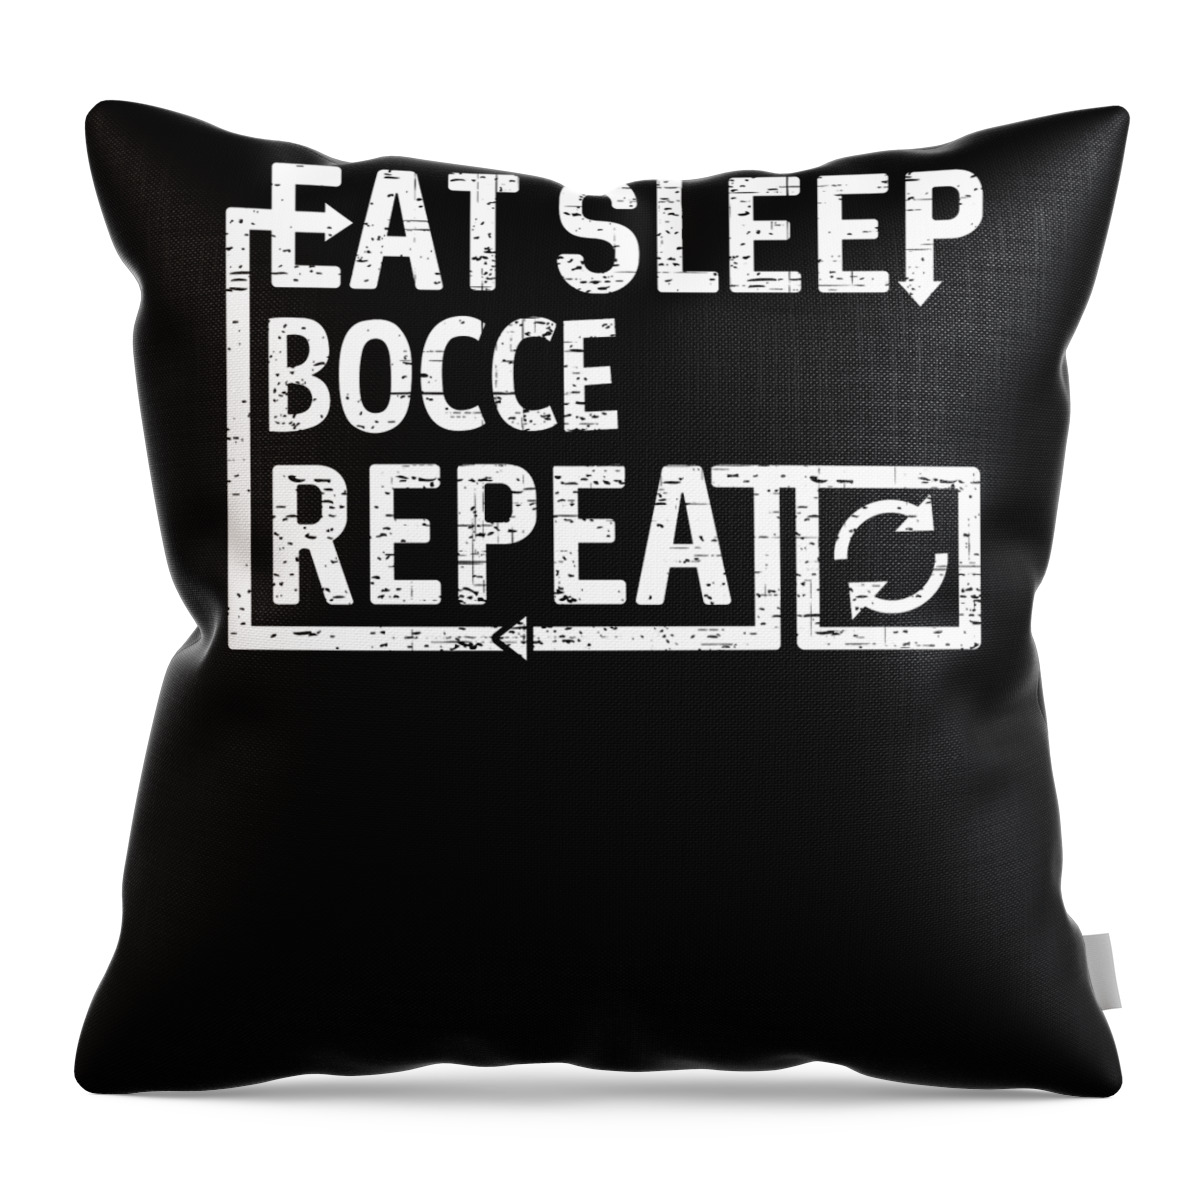 Cool Throw Pillow featuring the digital art Eat Sleep Bocce by Flippin Sweet Gear